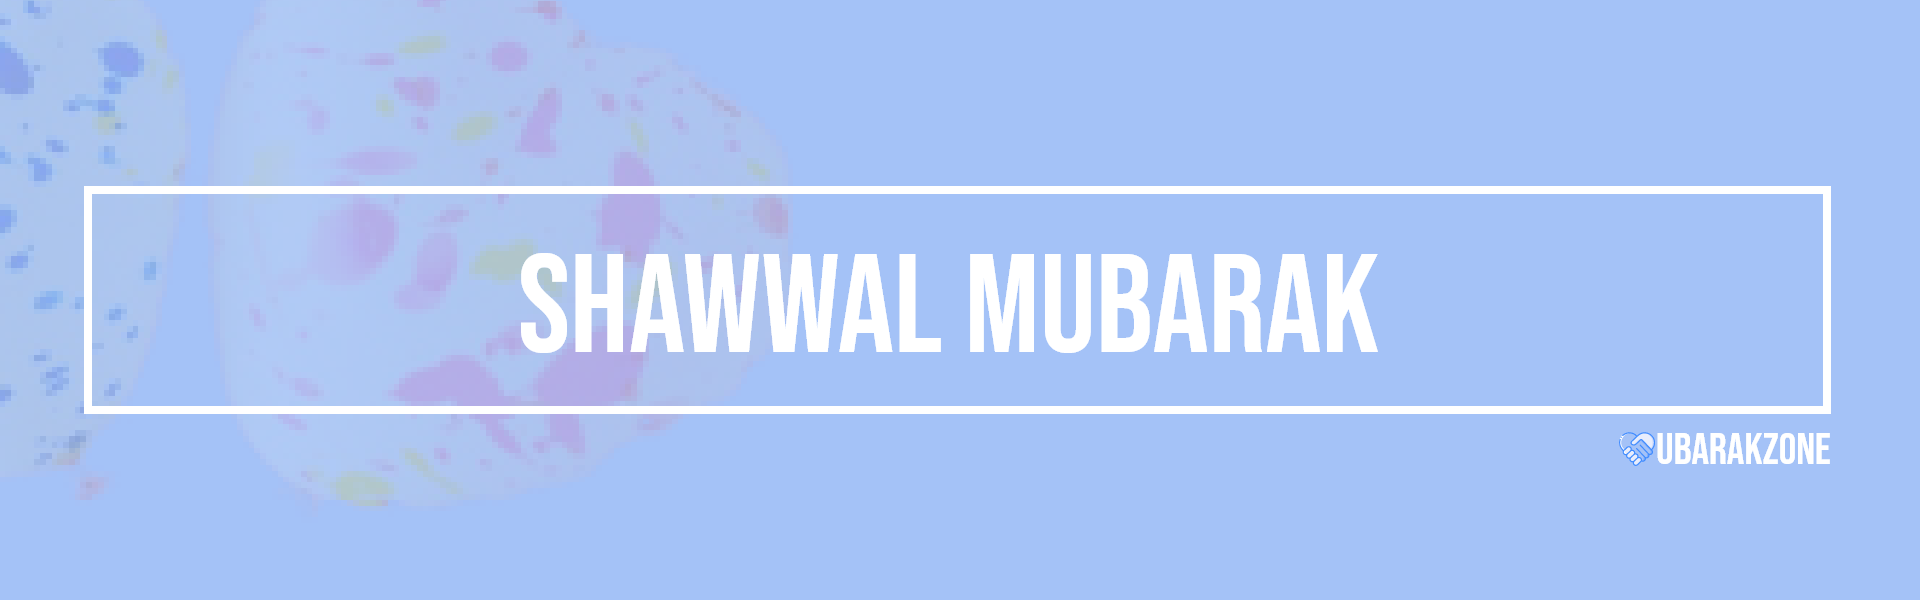 shawwal mubarak wishes messages